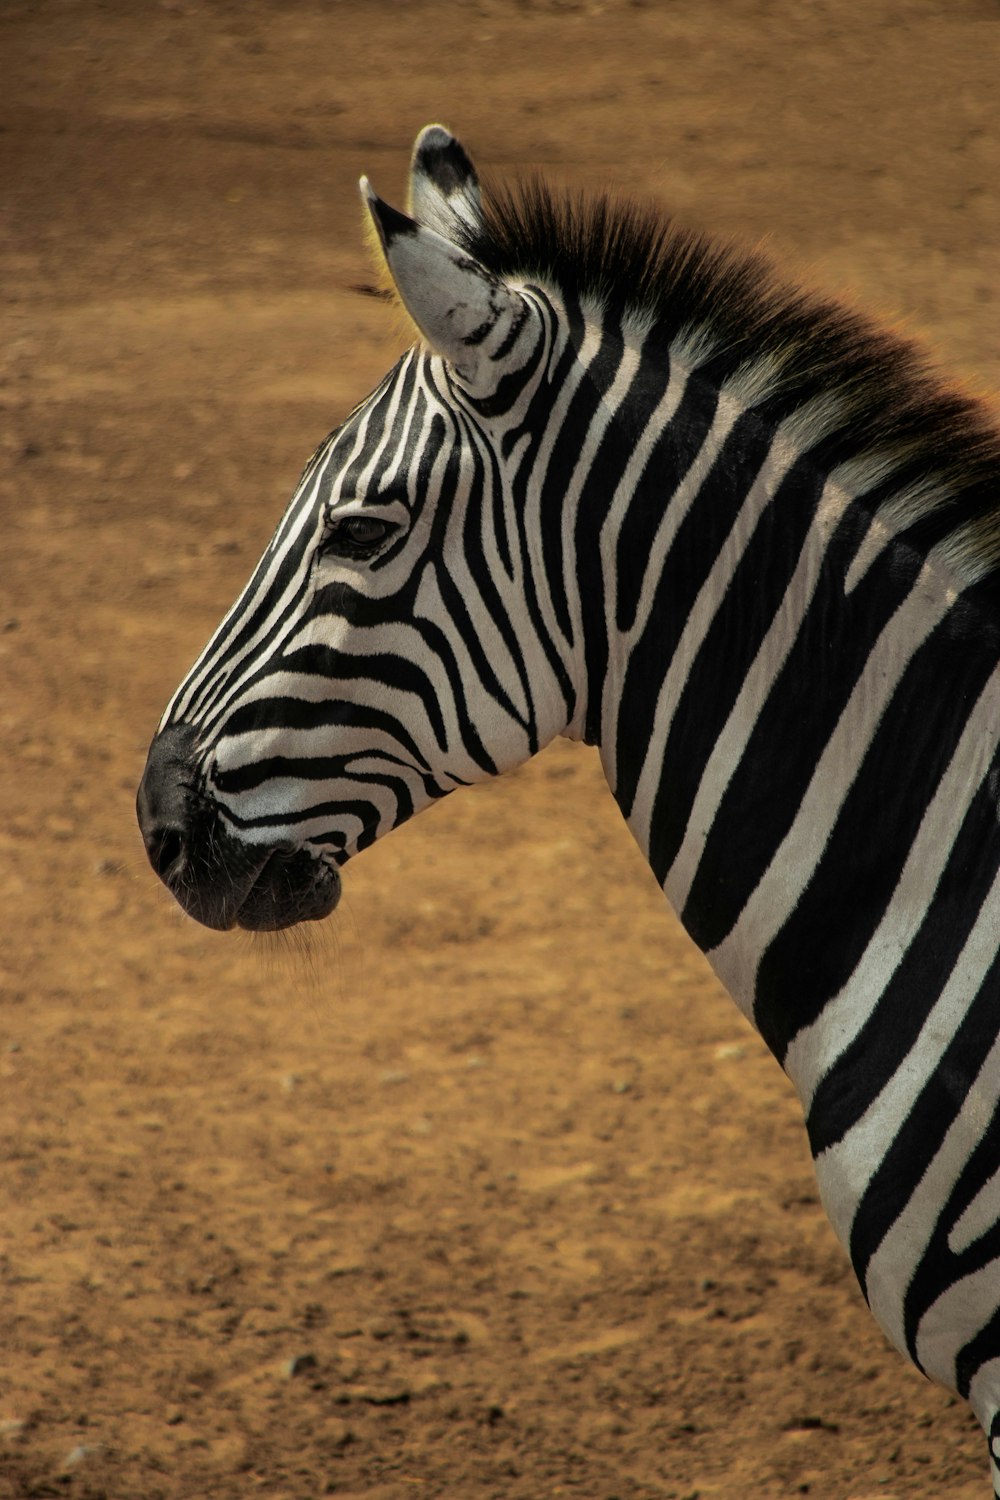 zebra standing on brown sand during daytime